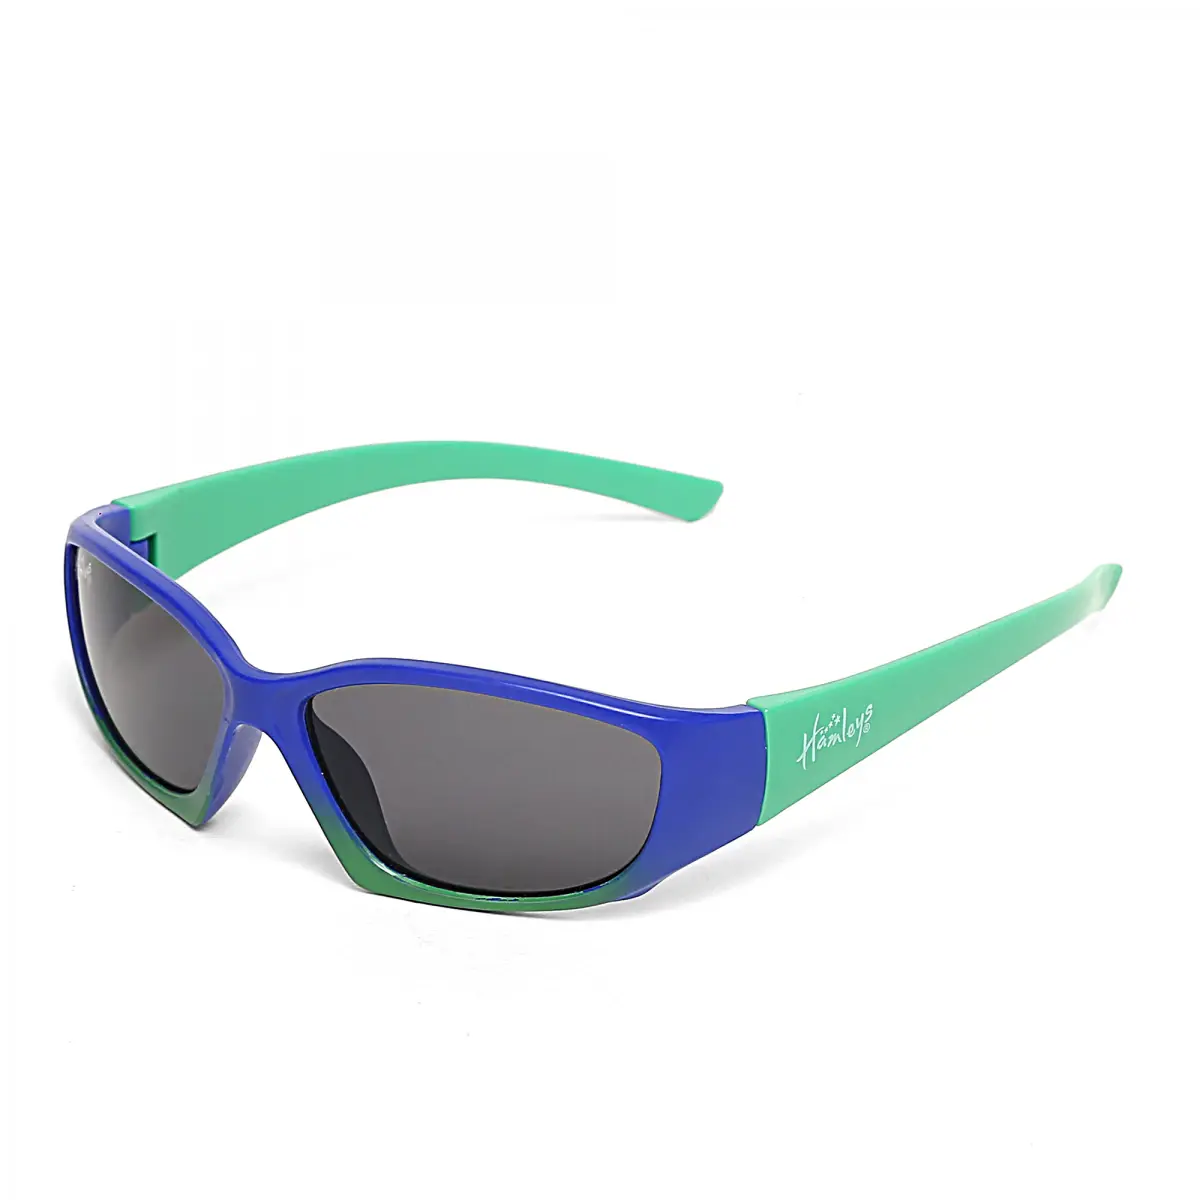 Hamleys Sunglasses for Kids Blue Green 3Y